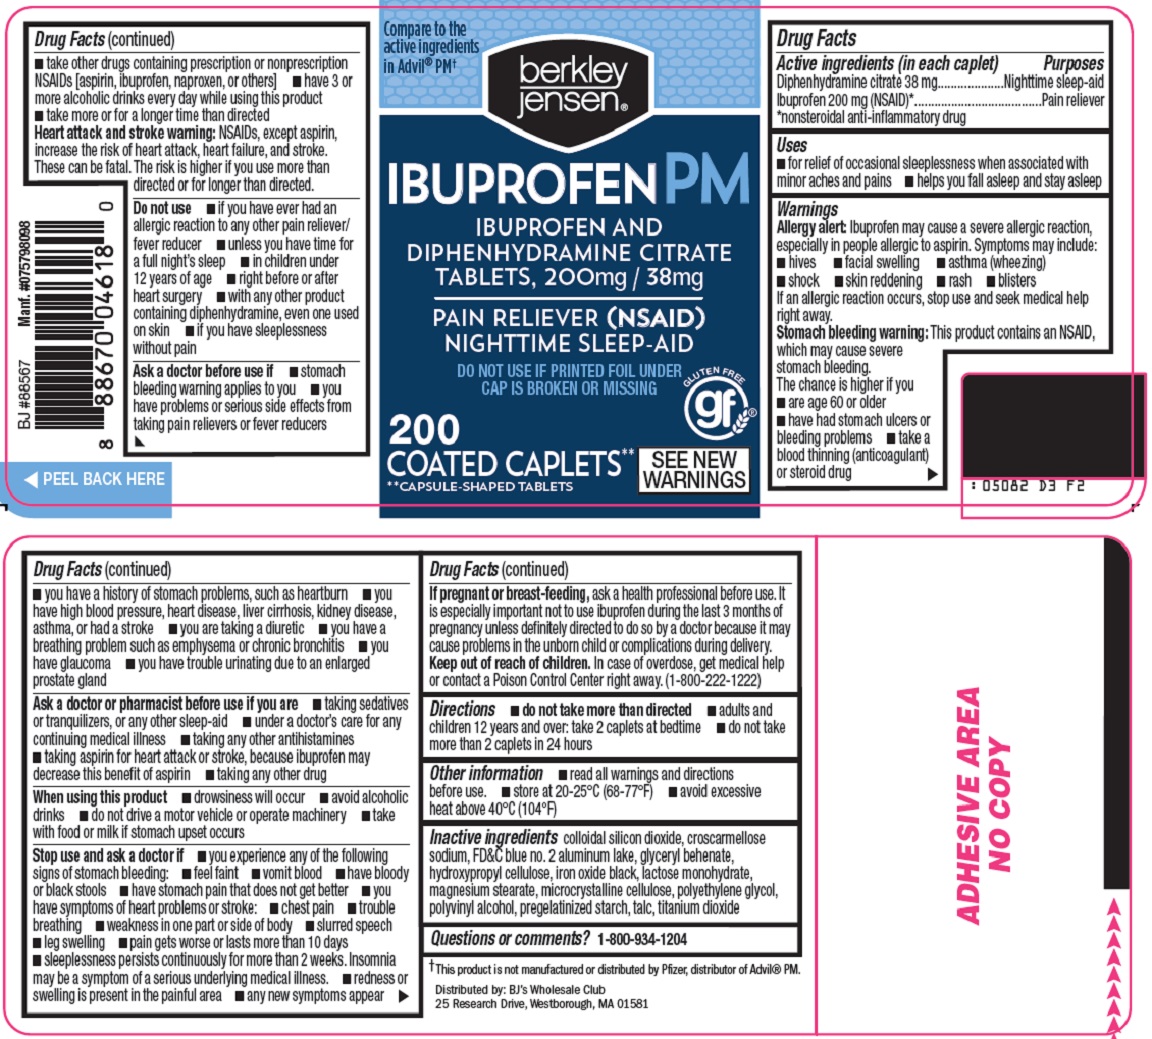 diphenhydramine citrate, ibuprofen (berkley and jensen ibuprofen pm)